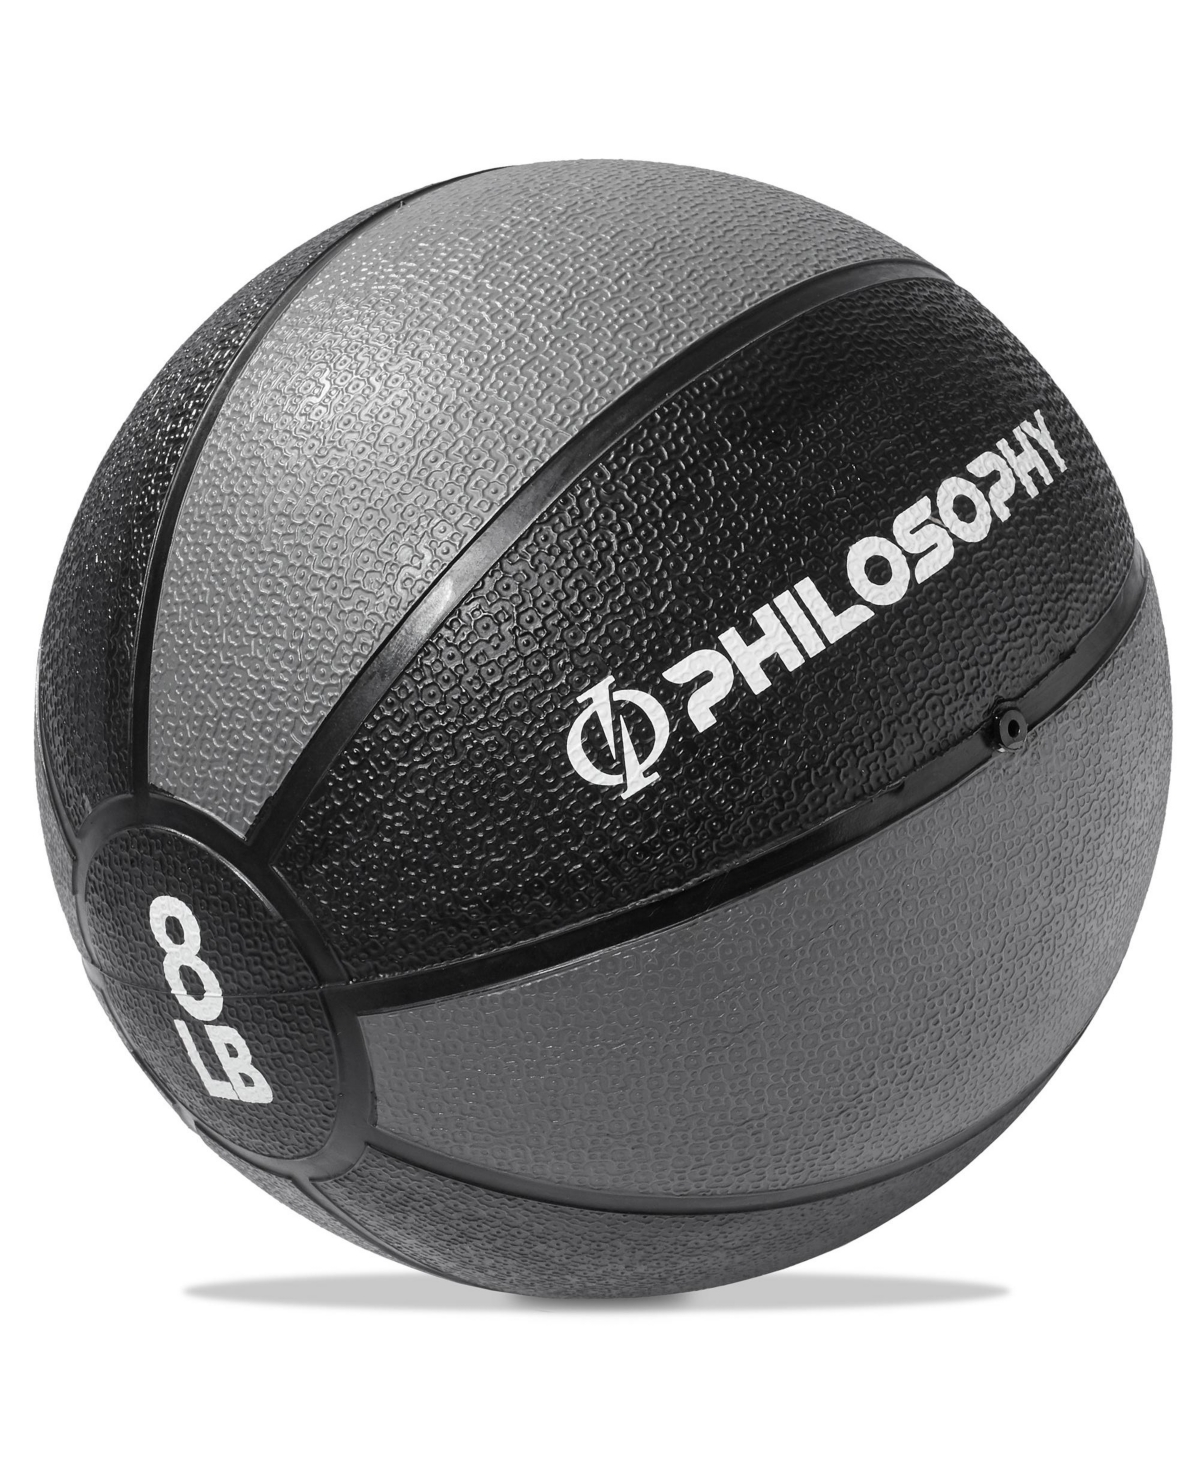 Medicine Ball, 8 Lb - Weighted Fitness Non-Slip Ball - Black